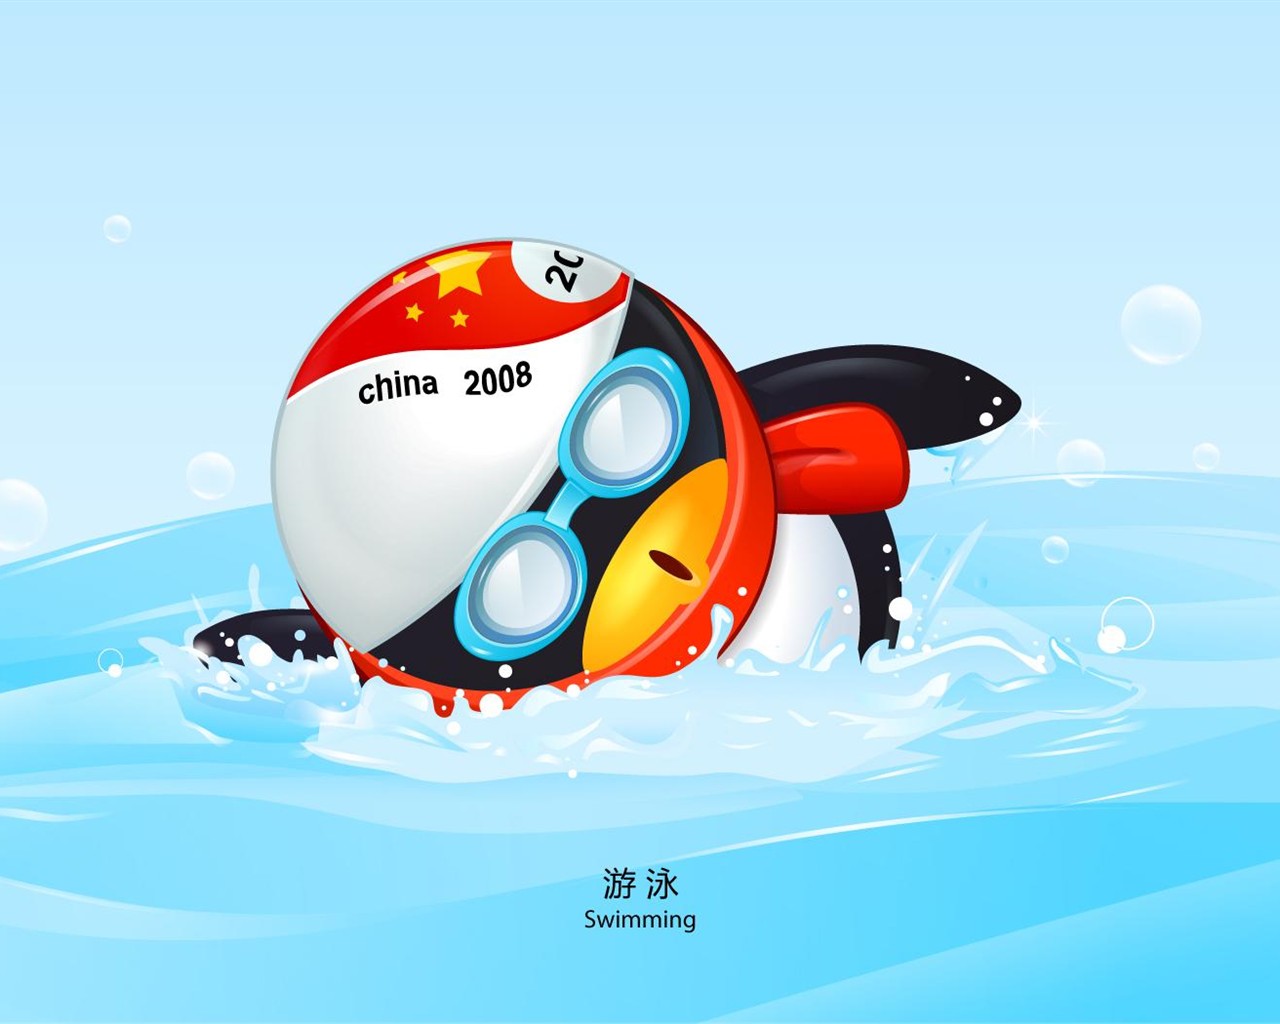 QQ Olympic sports theme wallpaper #9 - 1280x1024